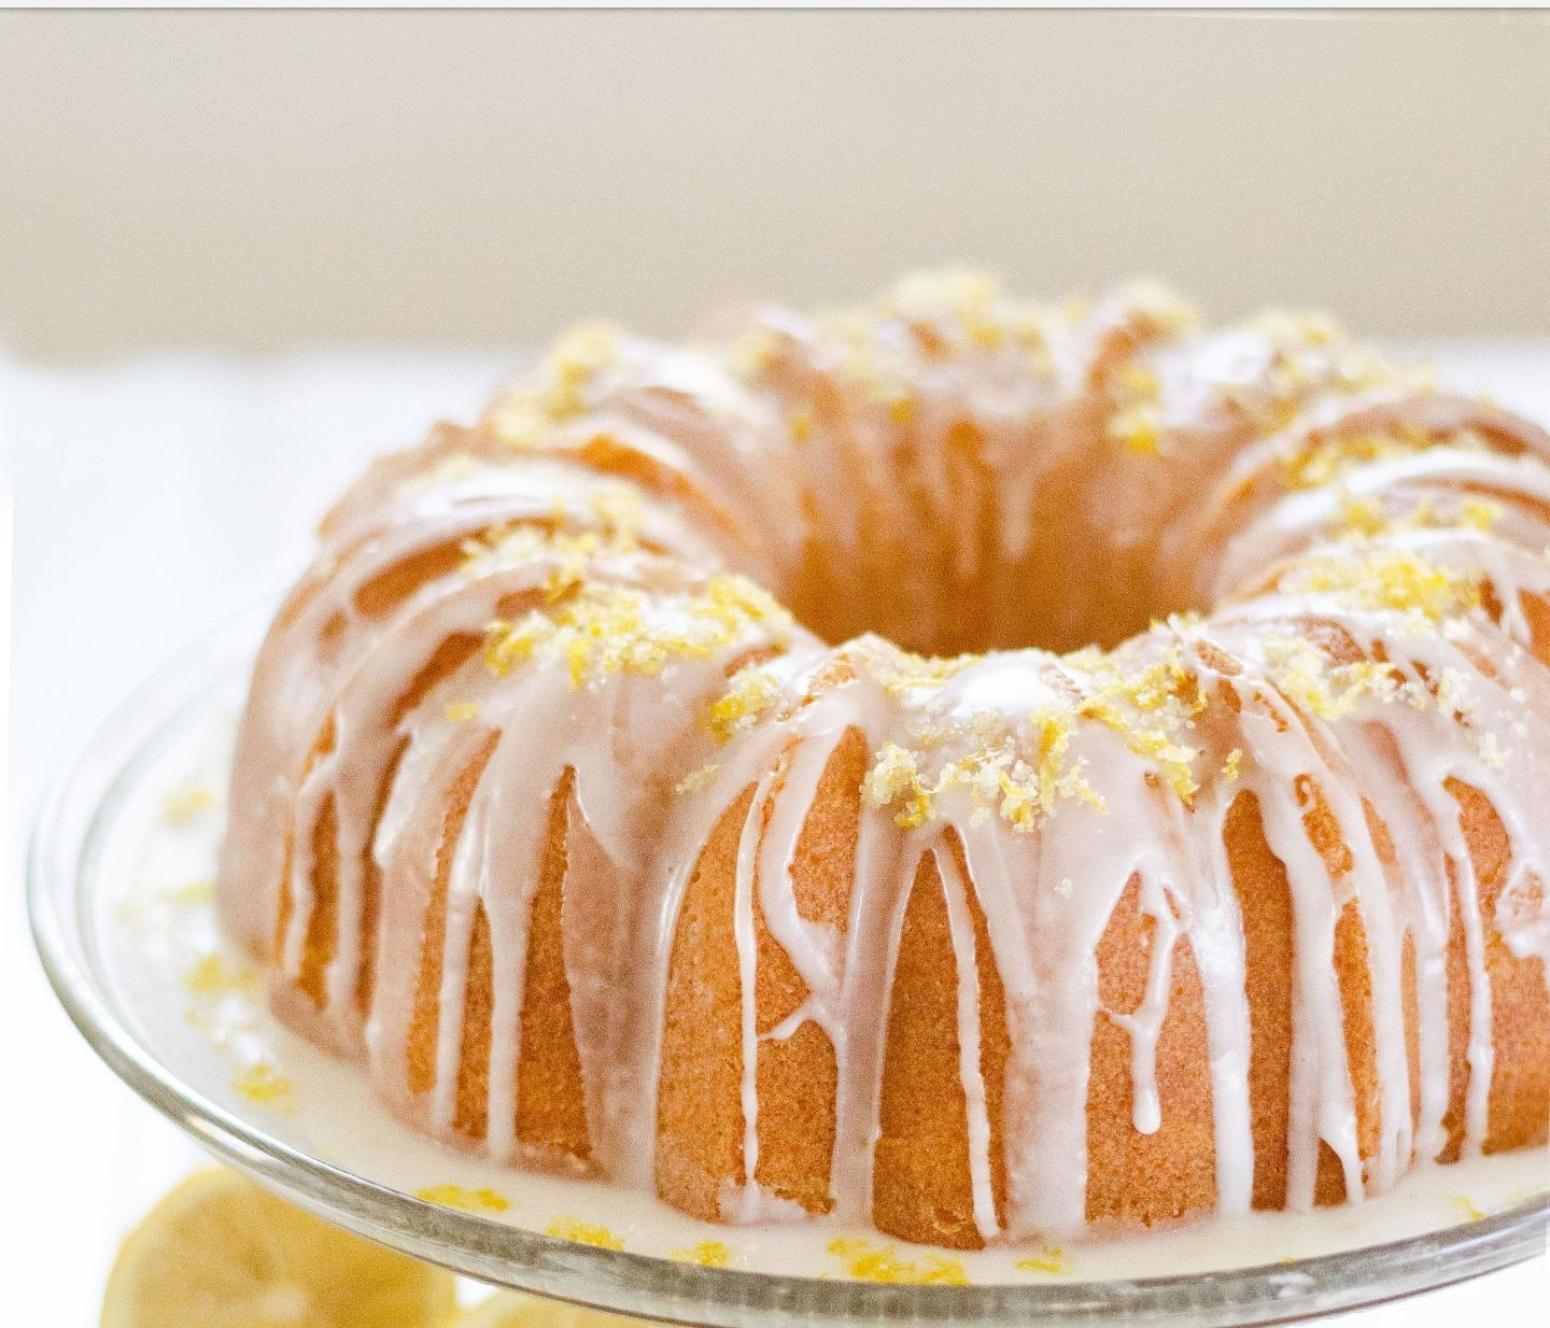 Super moist buttermilk lemon pound cake with glaze Recipe | Just A ...